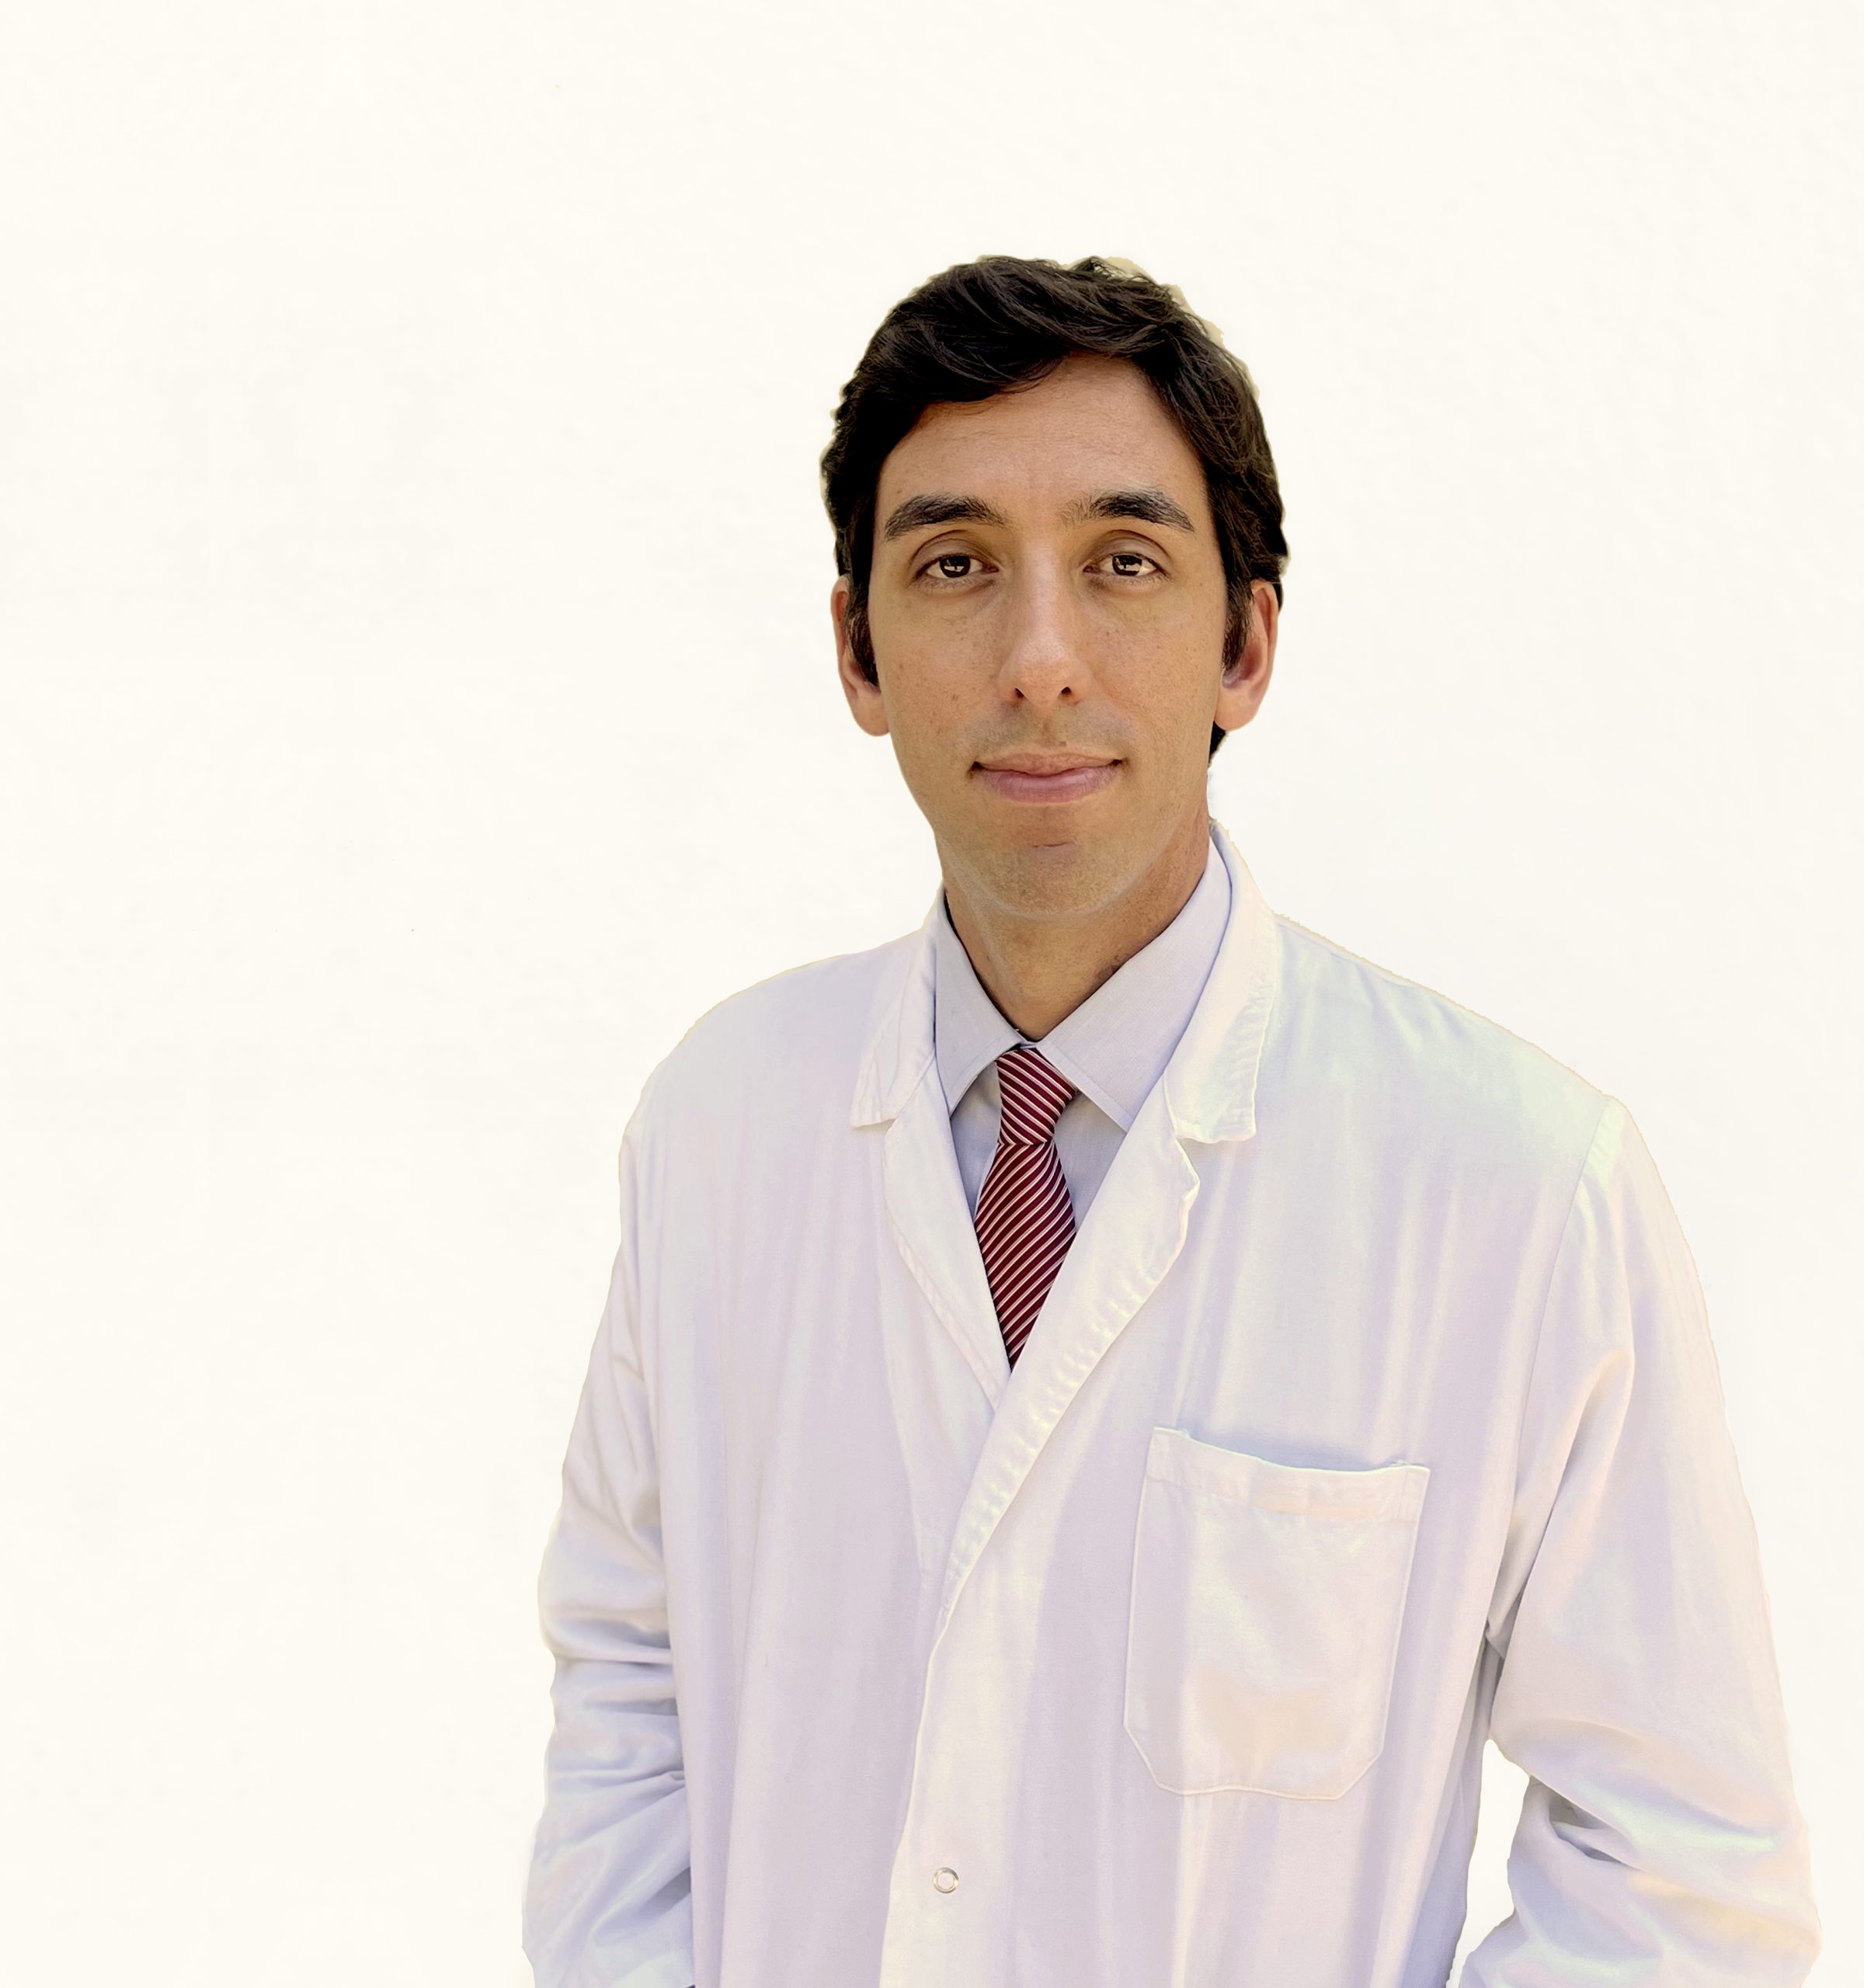 Niccolò Petrucciani è Specialista in Chirurgia Generale